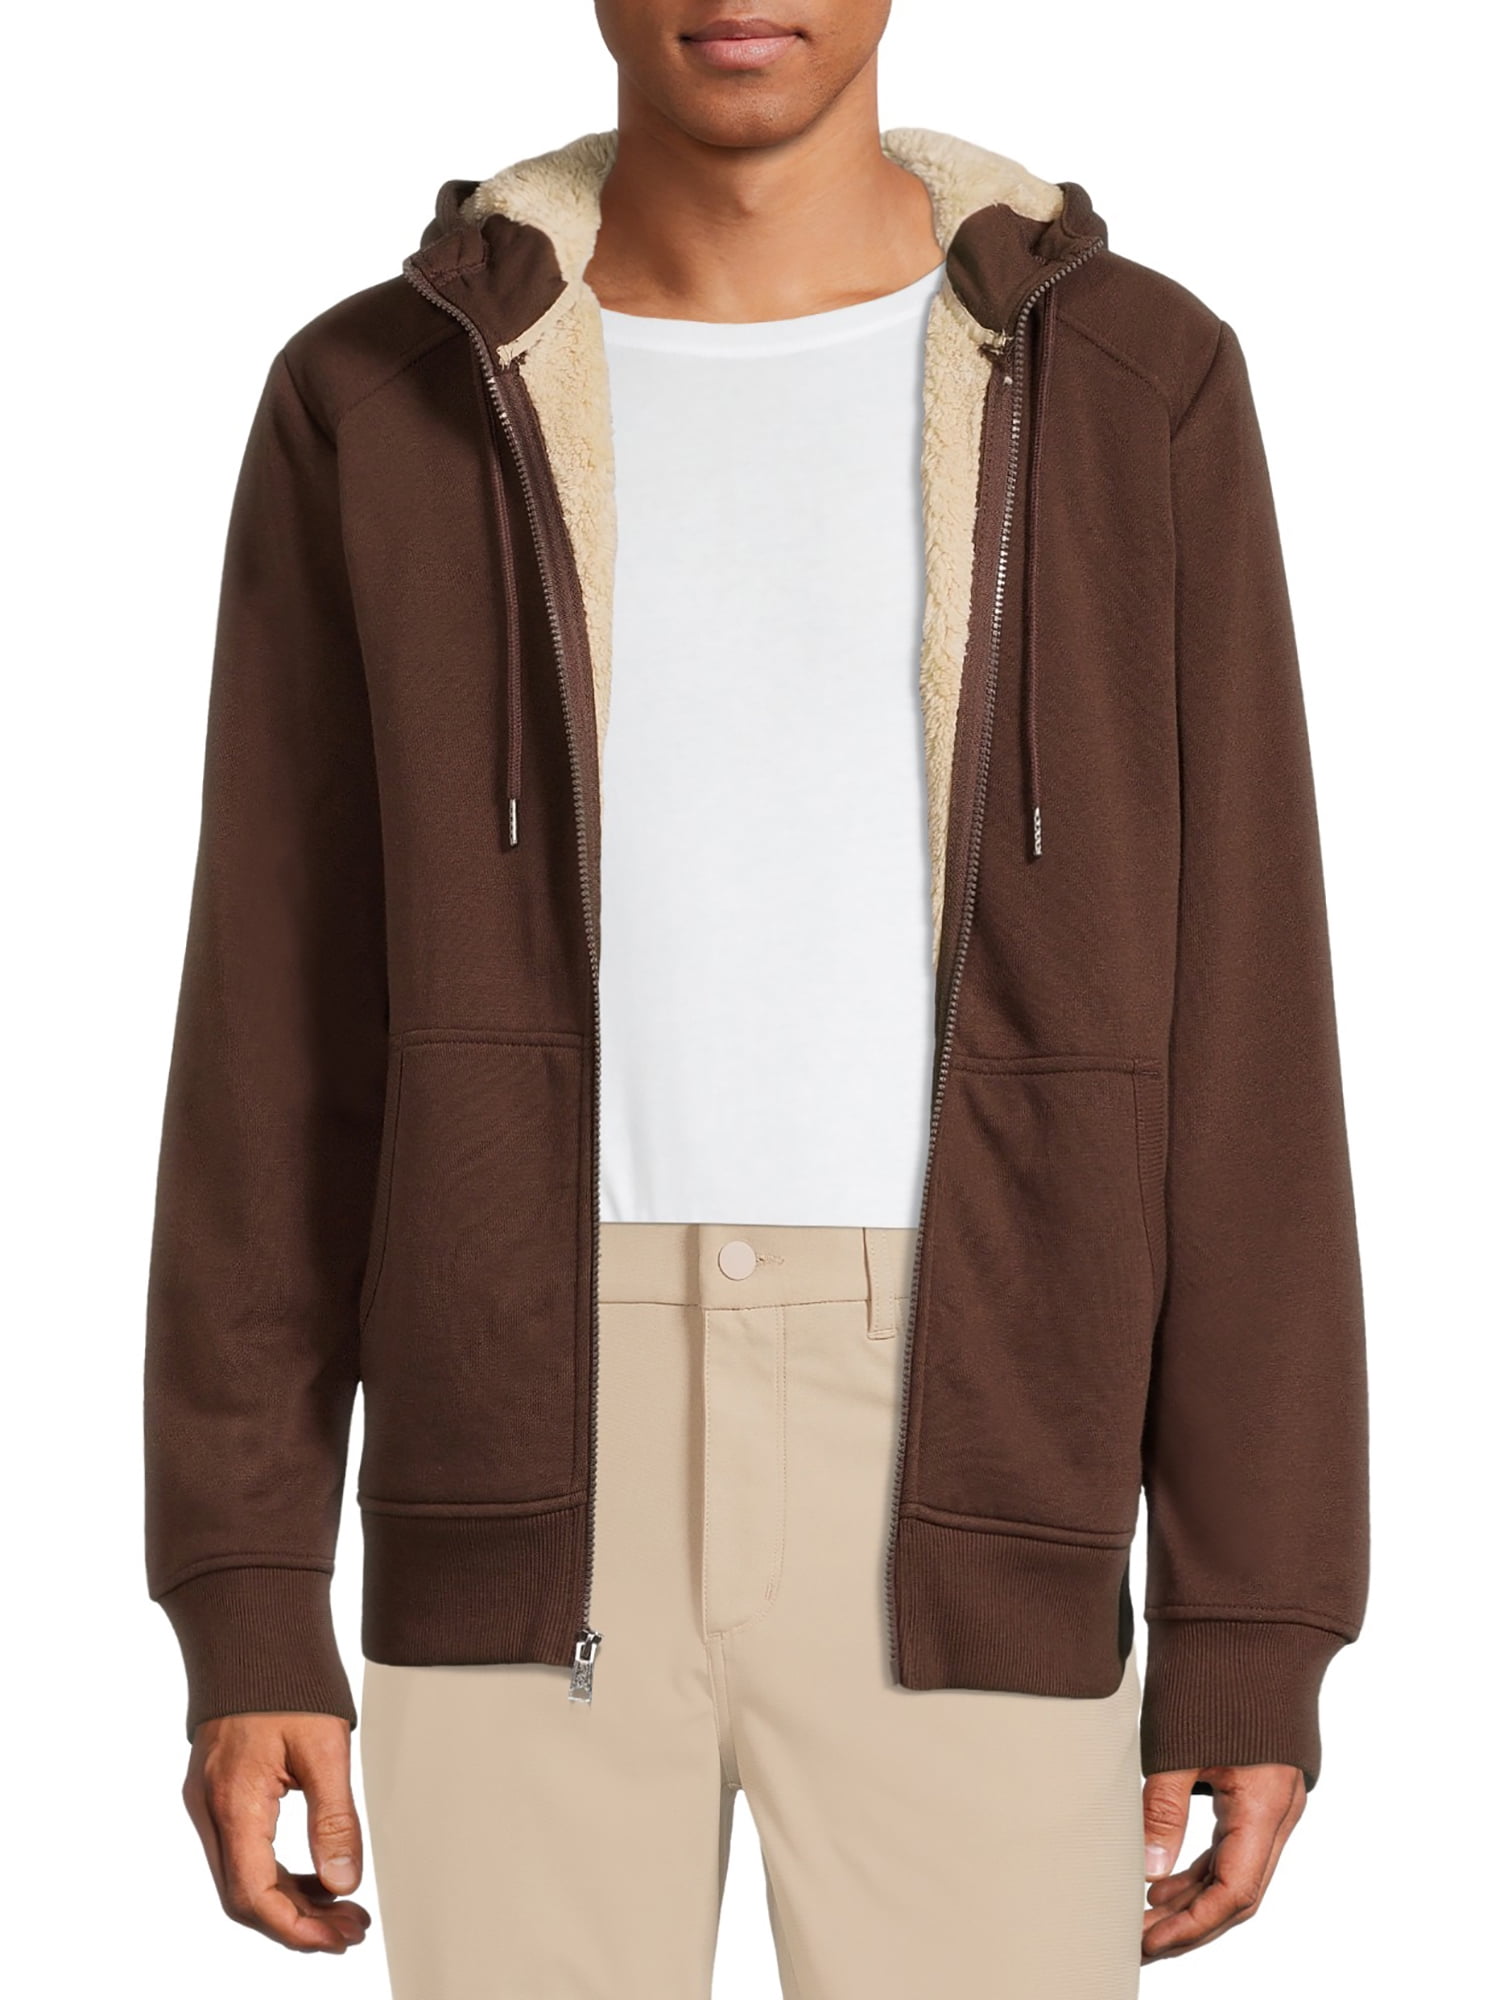 HEHE TAN Mens Pullover Hood California Republic Zip Hoodies Hooded Classic Jackets Coats